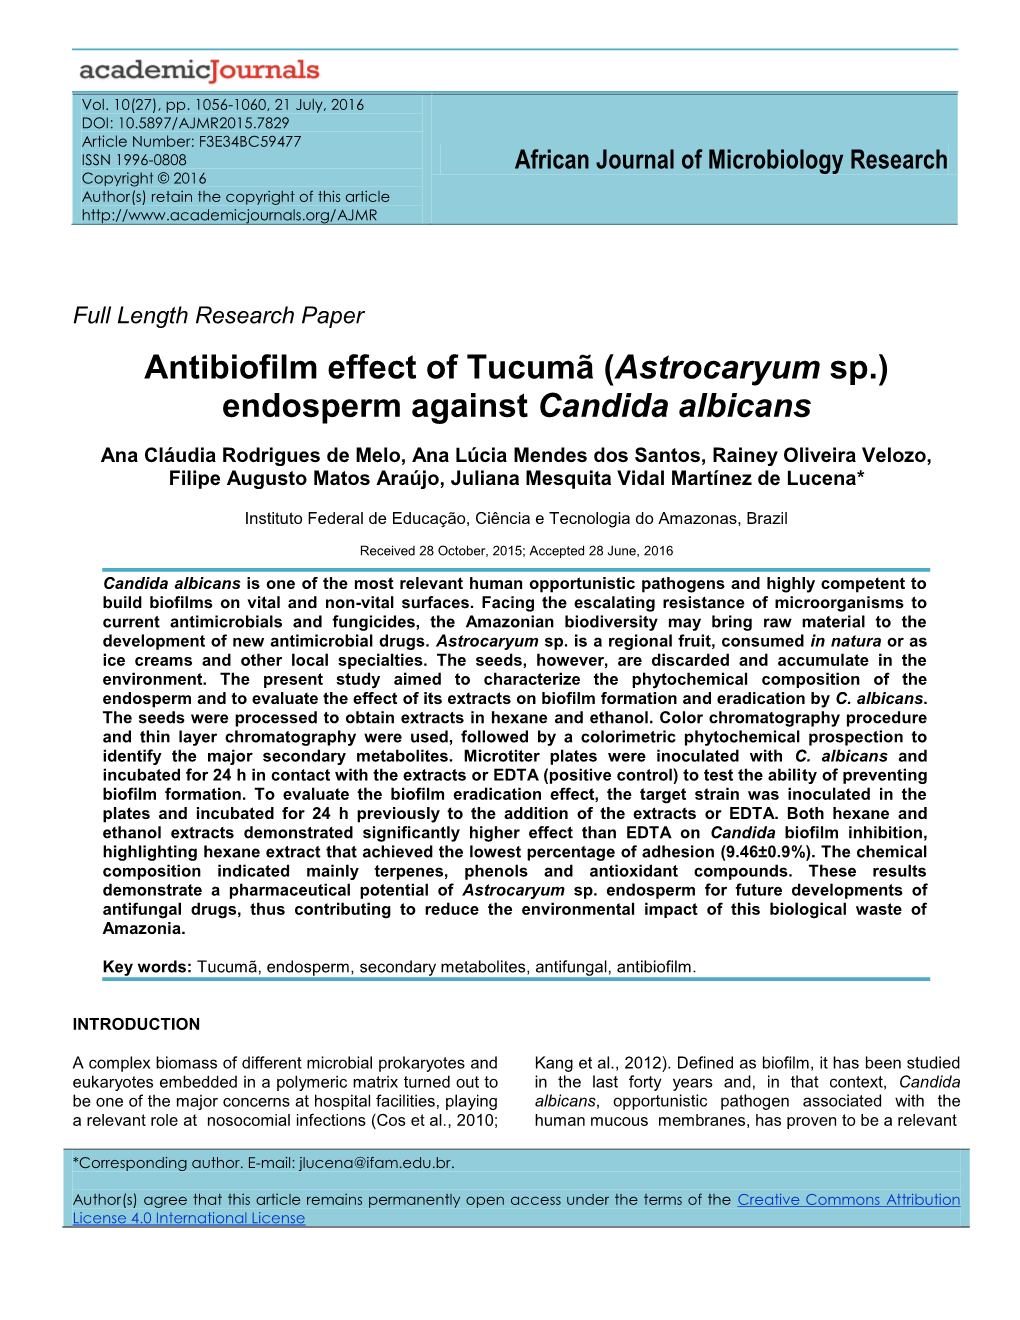 (Astrocaryum Sp.) Endosperm Against Candida Albicans